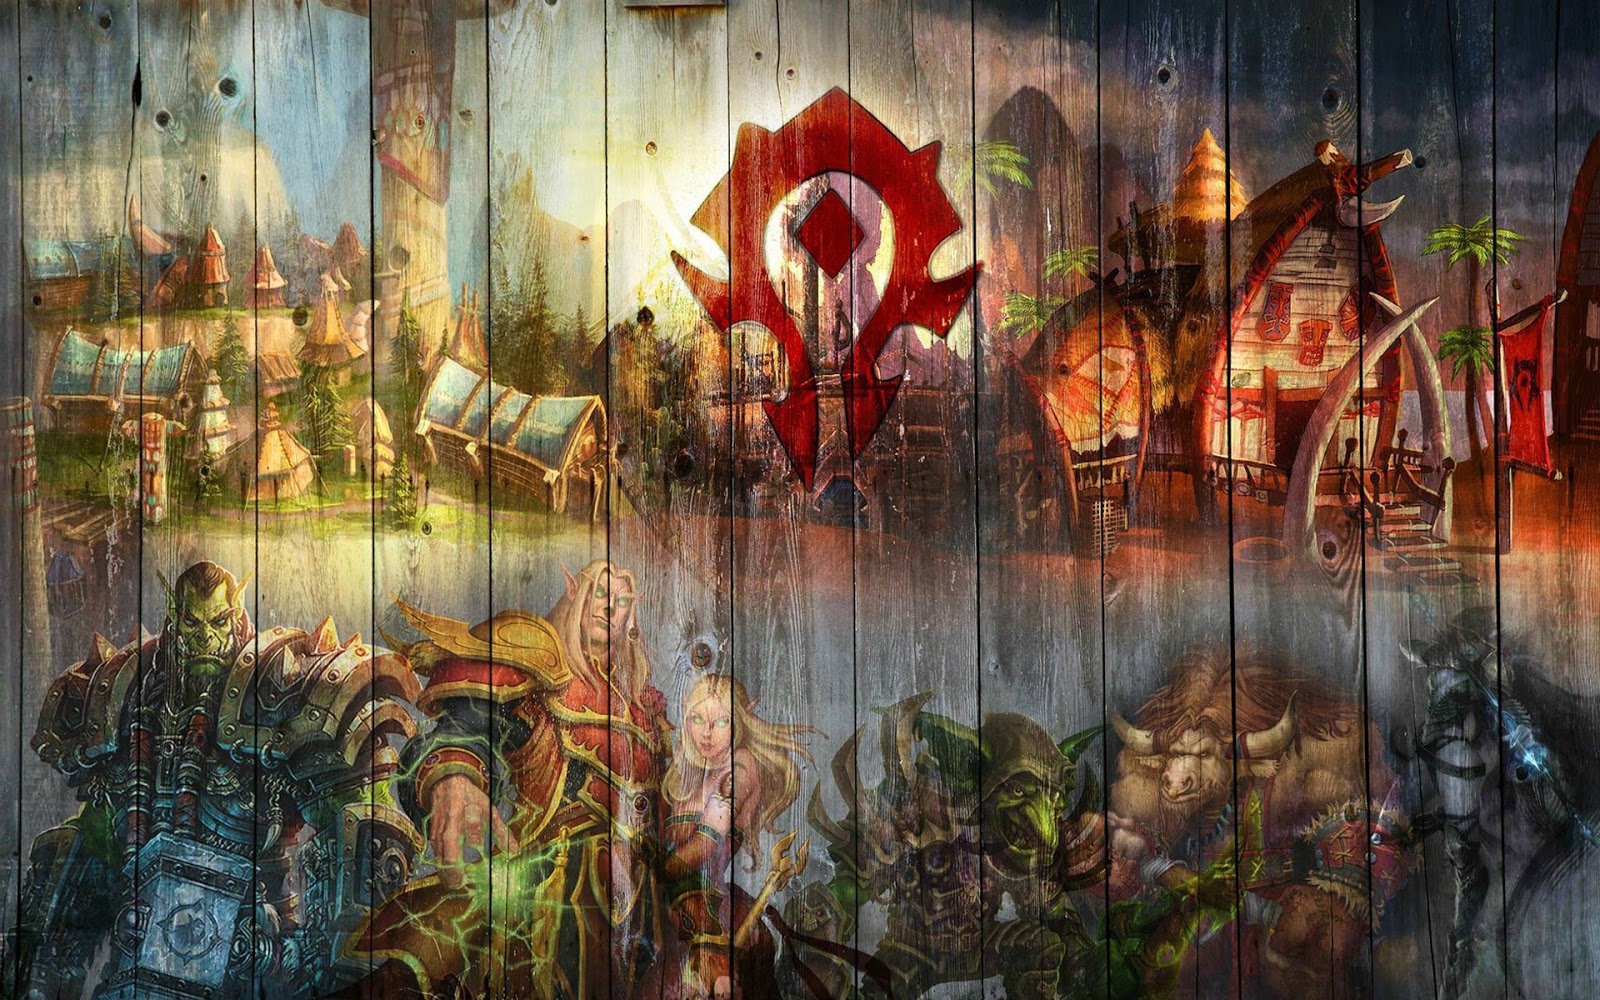 100 Hq World Of Warcraft Wallpapers Hd 4k 2019 Shala